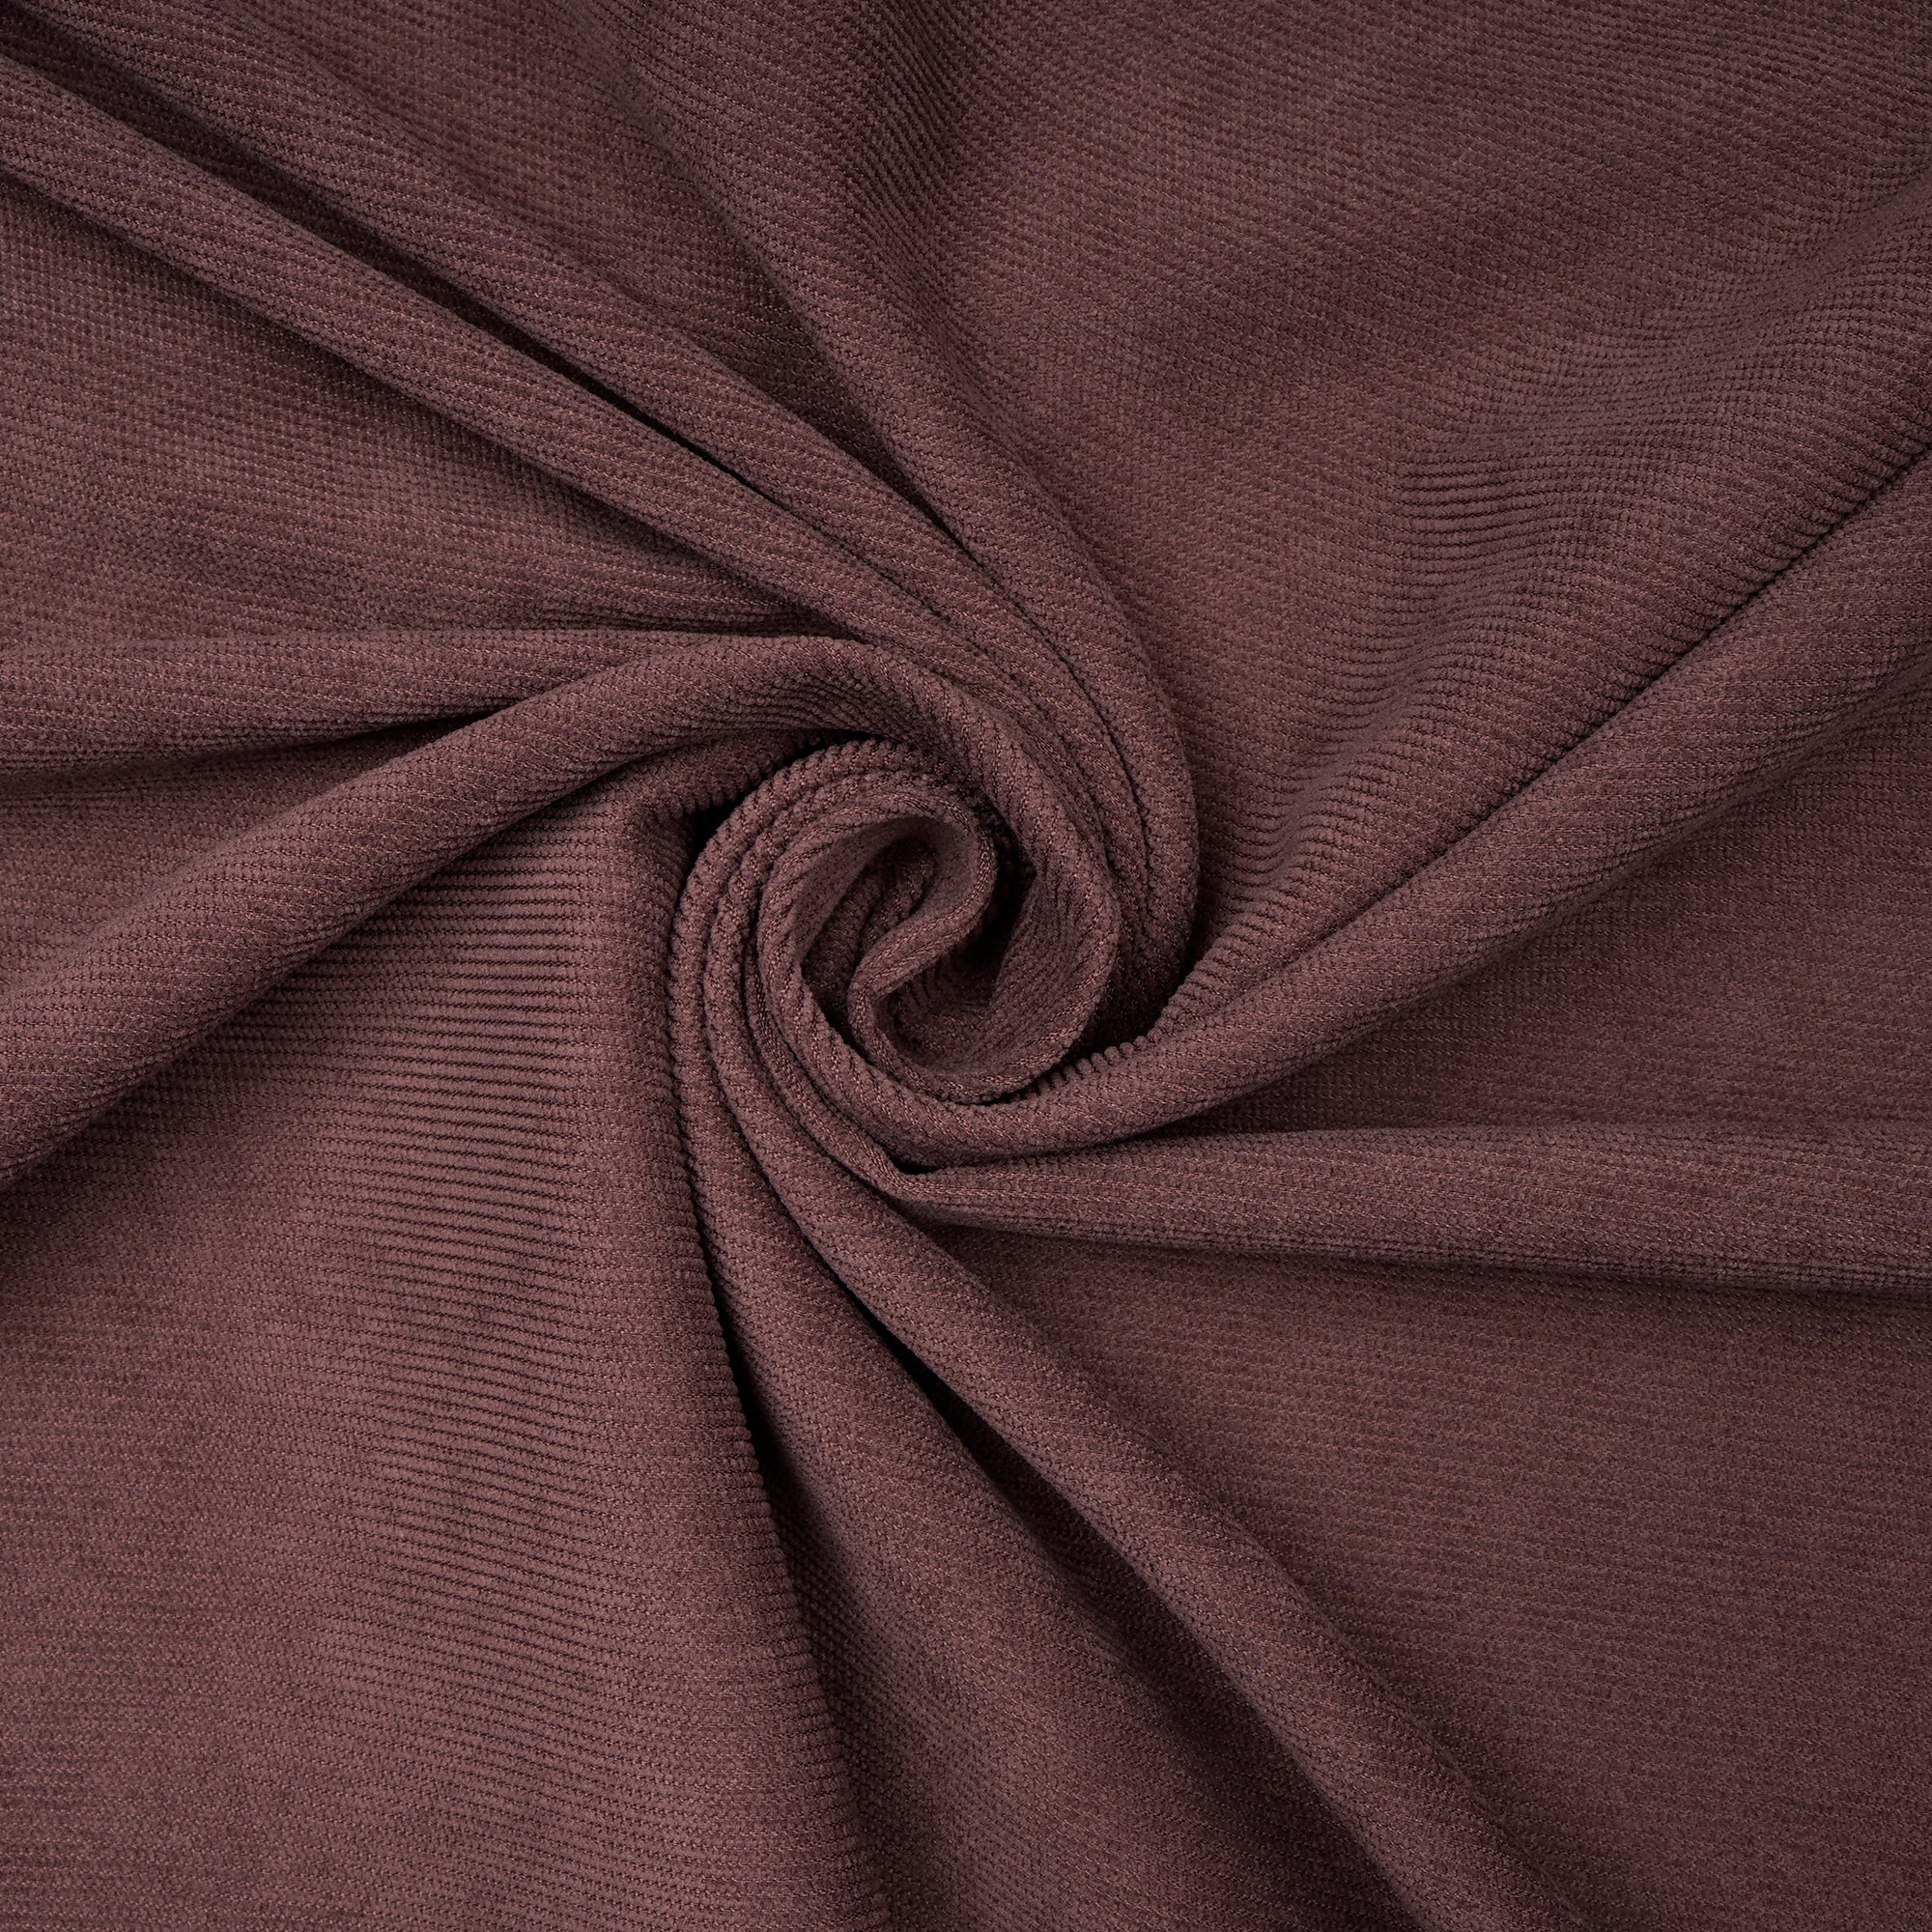 Renaissance Rose Imported Cotton Corduroy Fabric (60" Wide)